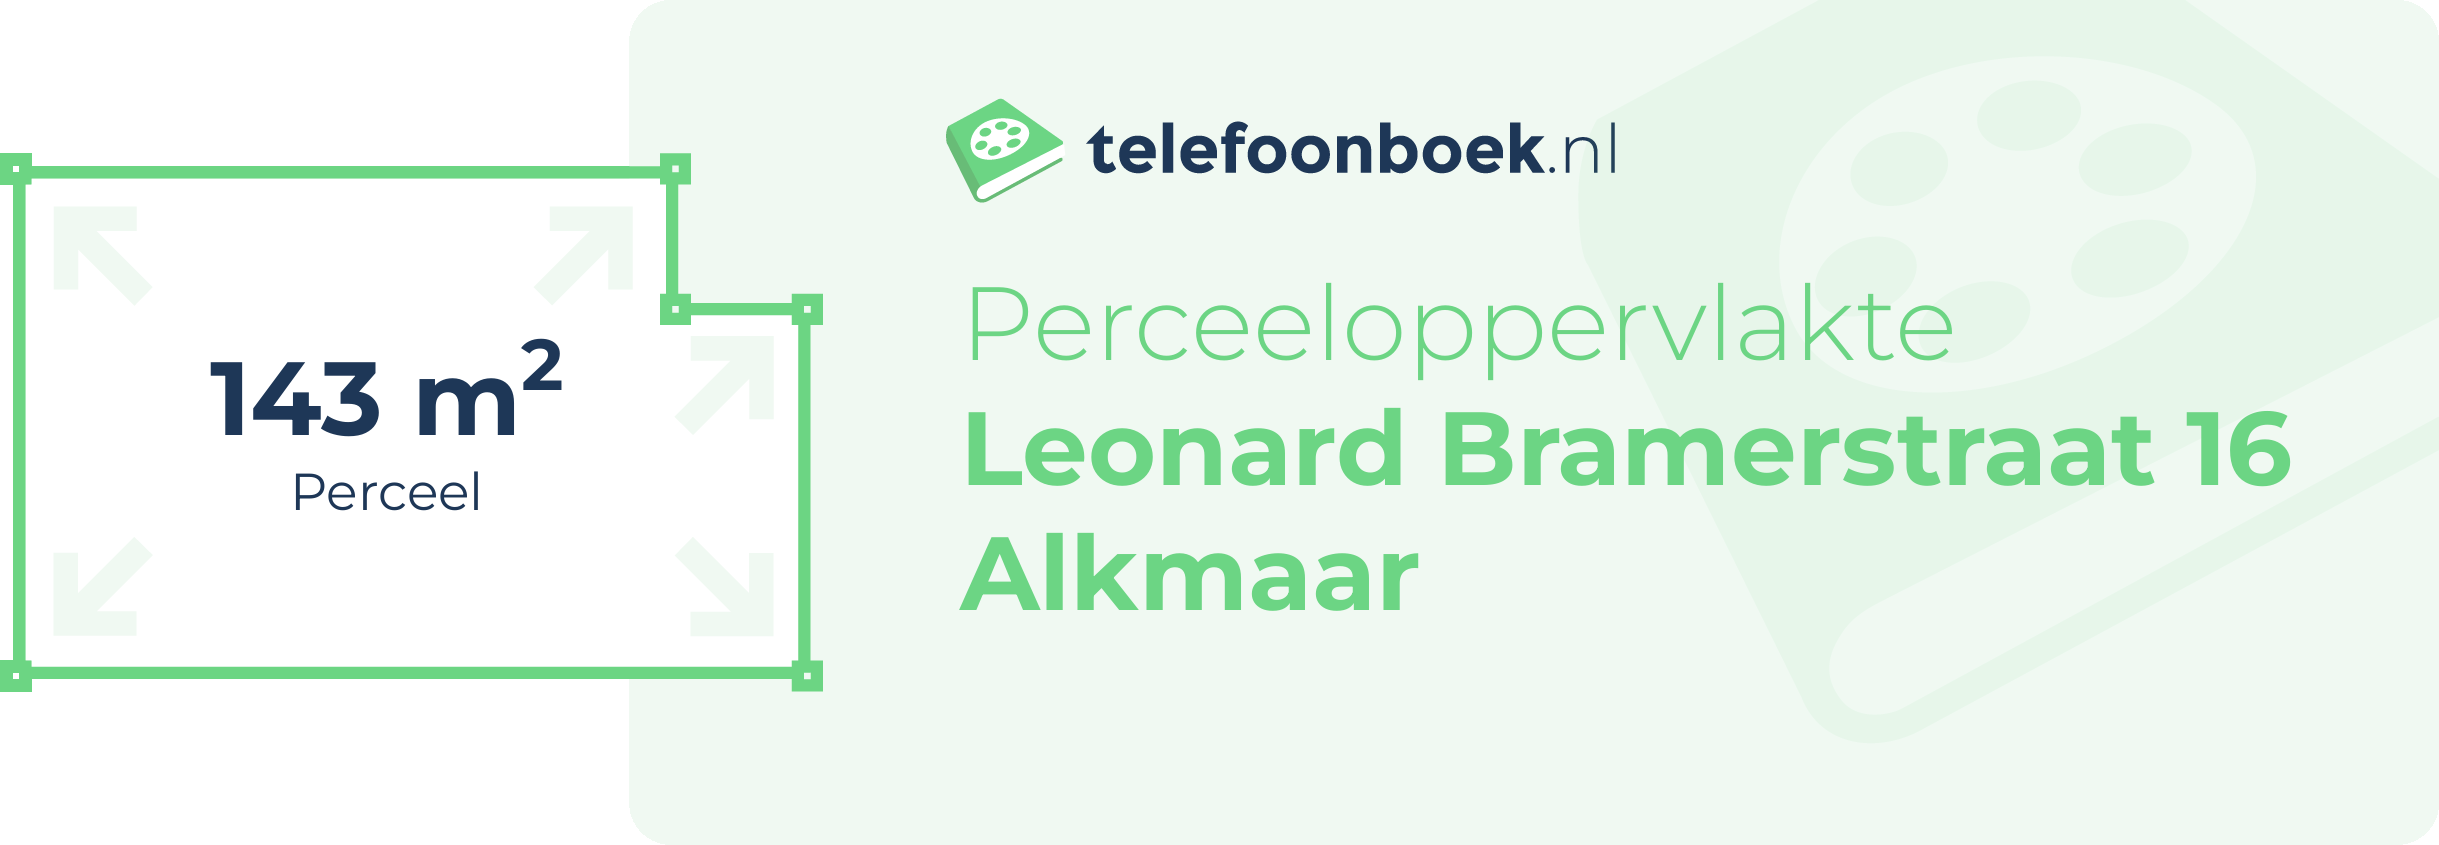 Perceeloppervlakte Leonard Bramerstraat 16 Alkmaar